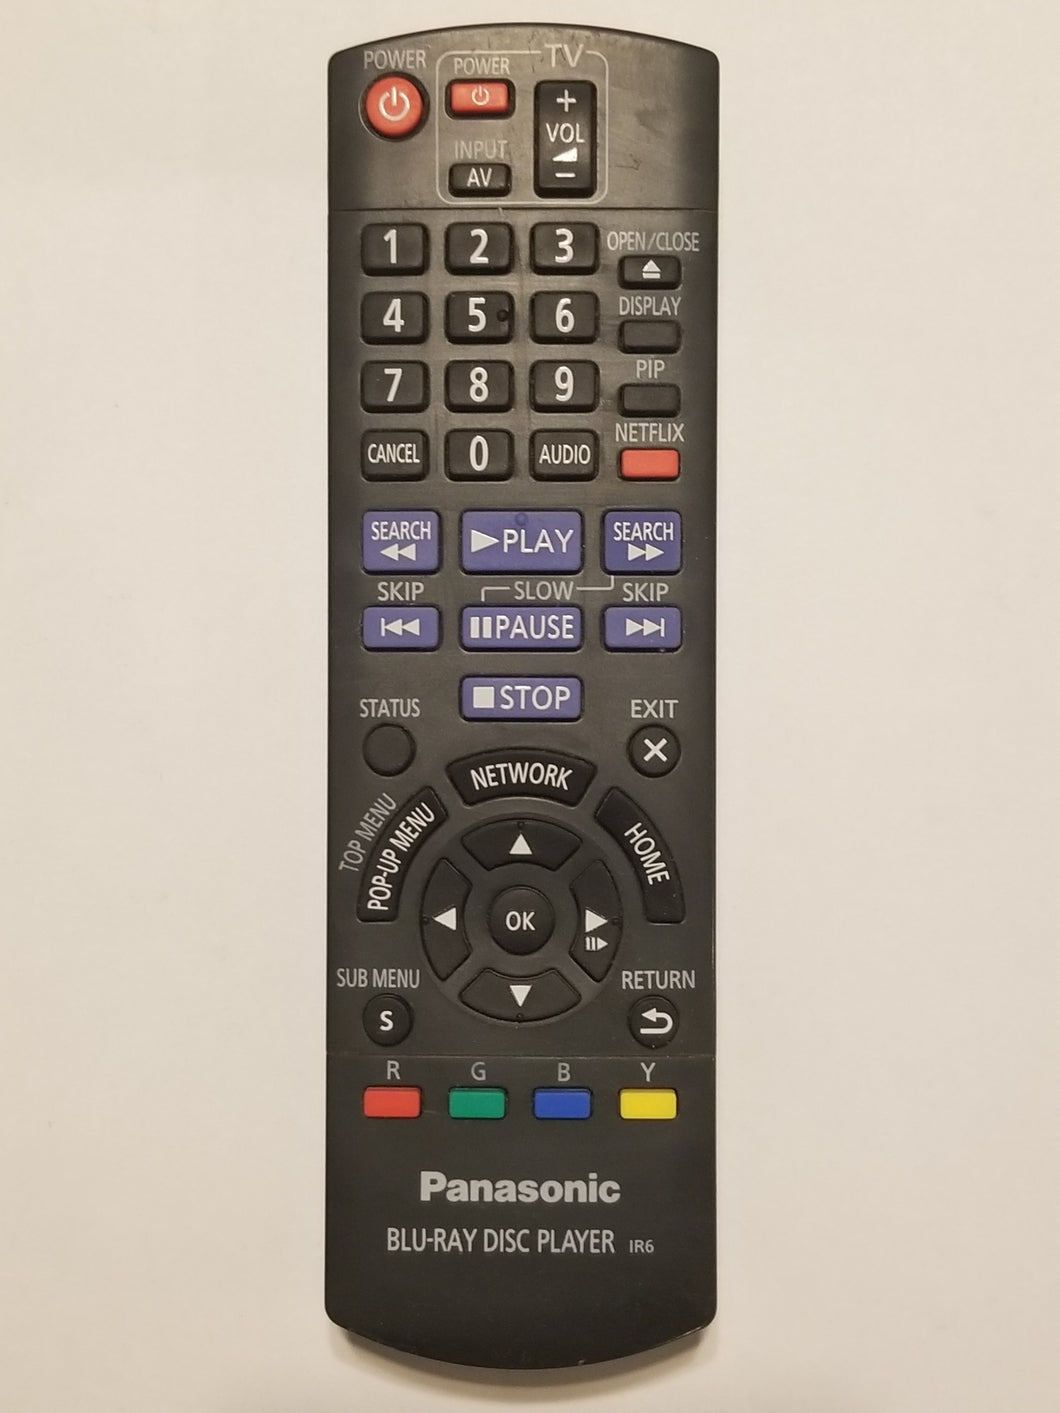 IR6 Panasonic Blu-ray Disc Player C1000833 LR6 Remote Control